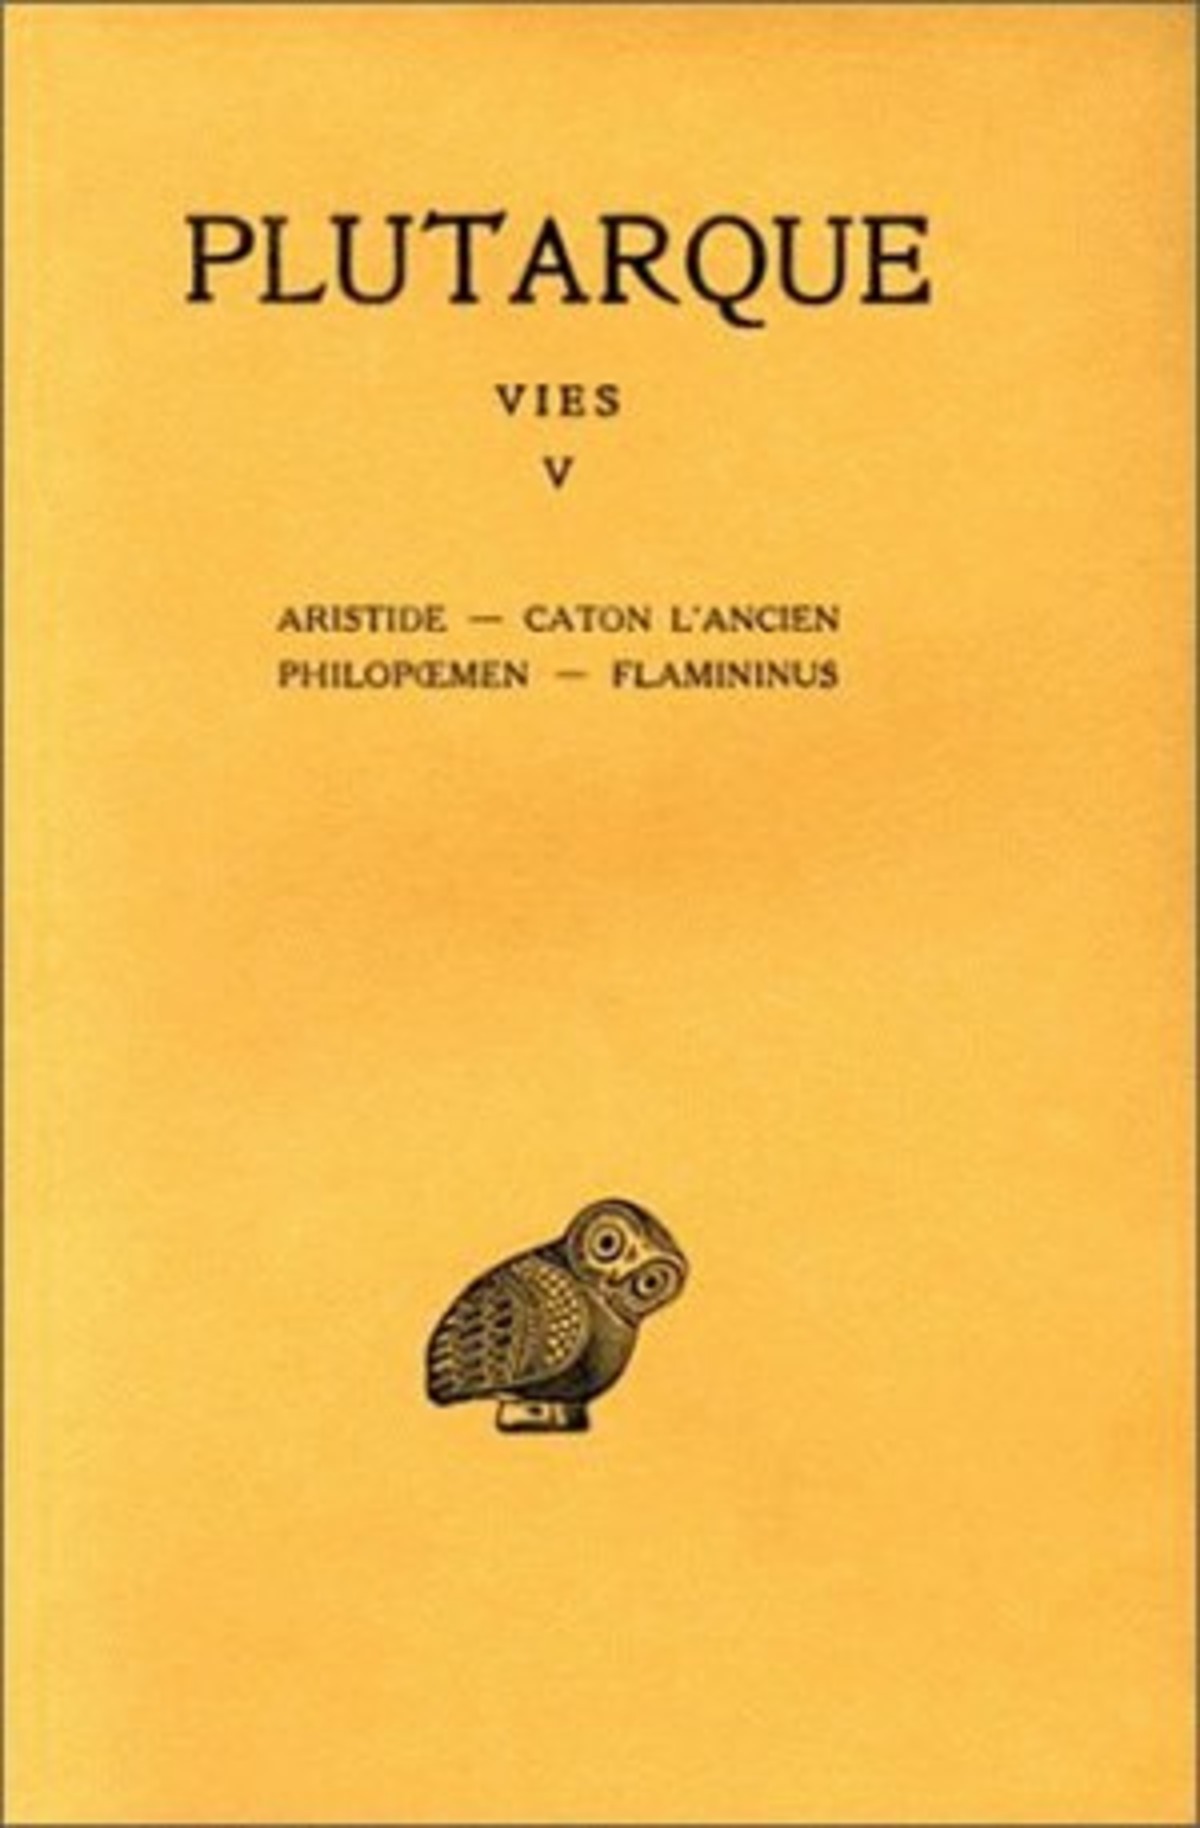 Vies. Tome V : Aristide - Caton l'Ancien - Philopoemen - Flamininus